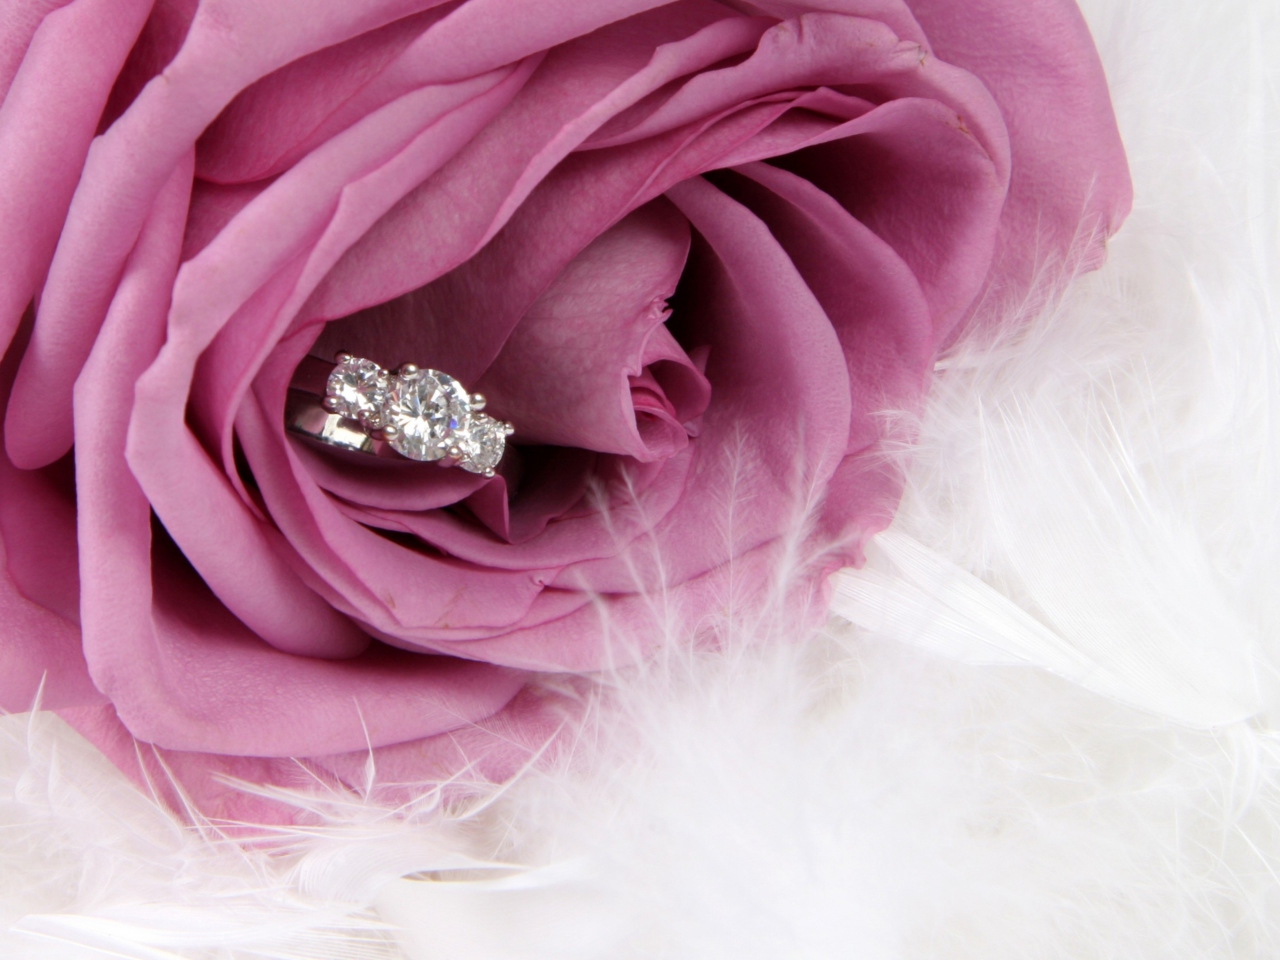 Engagement Ring In Pink Rose wallpaper 1280x960